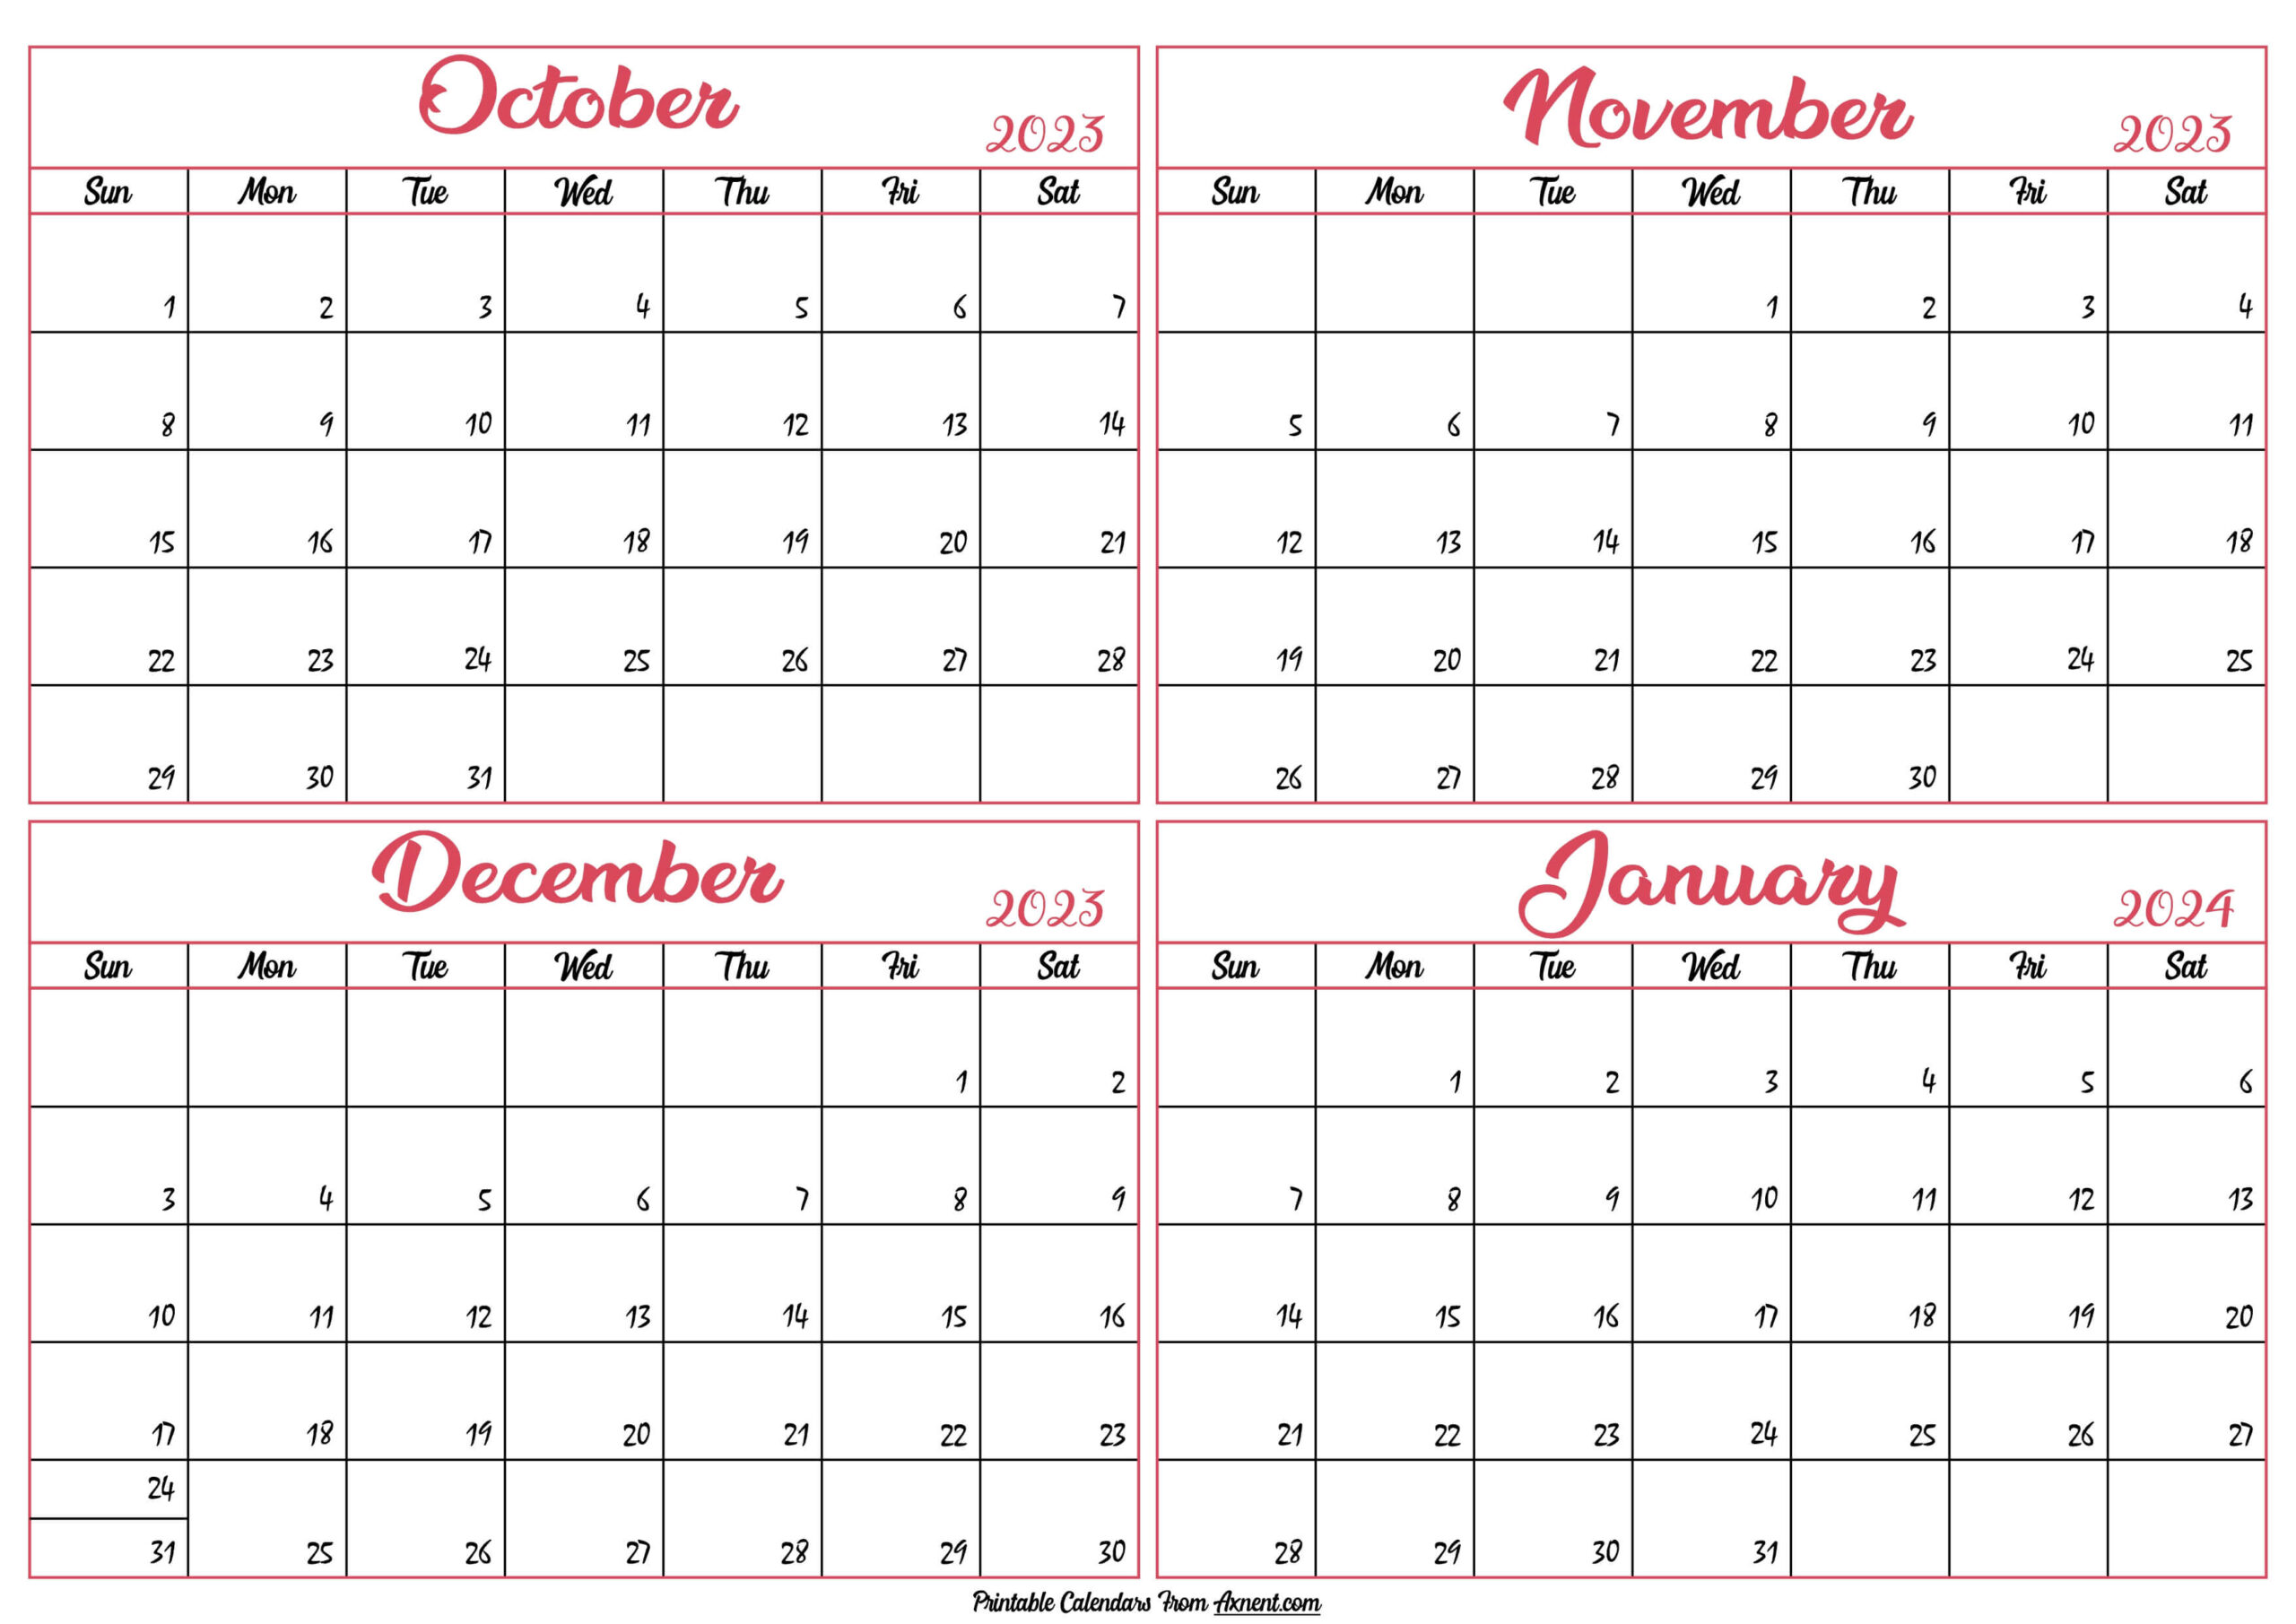 October 2023 To January 2024 Calendar Templates - Four Months | Printable Calendar October 2023 December 2024